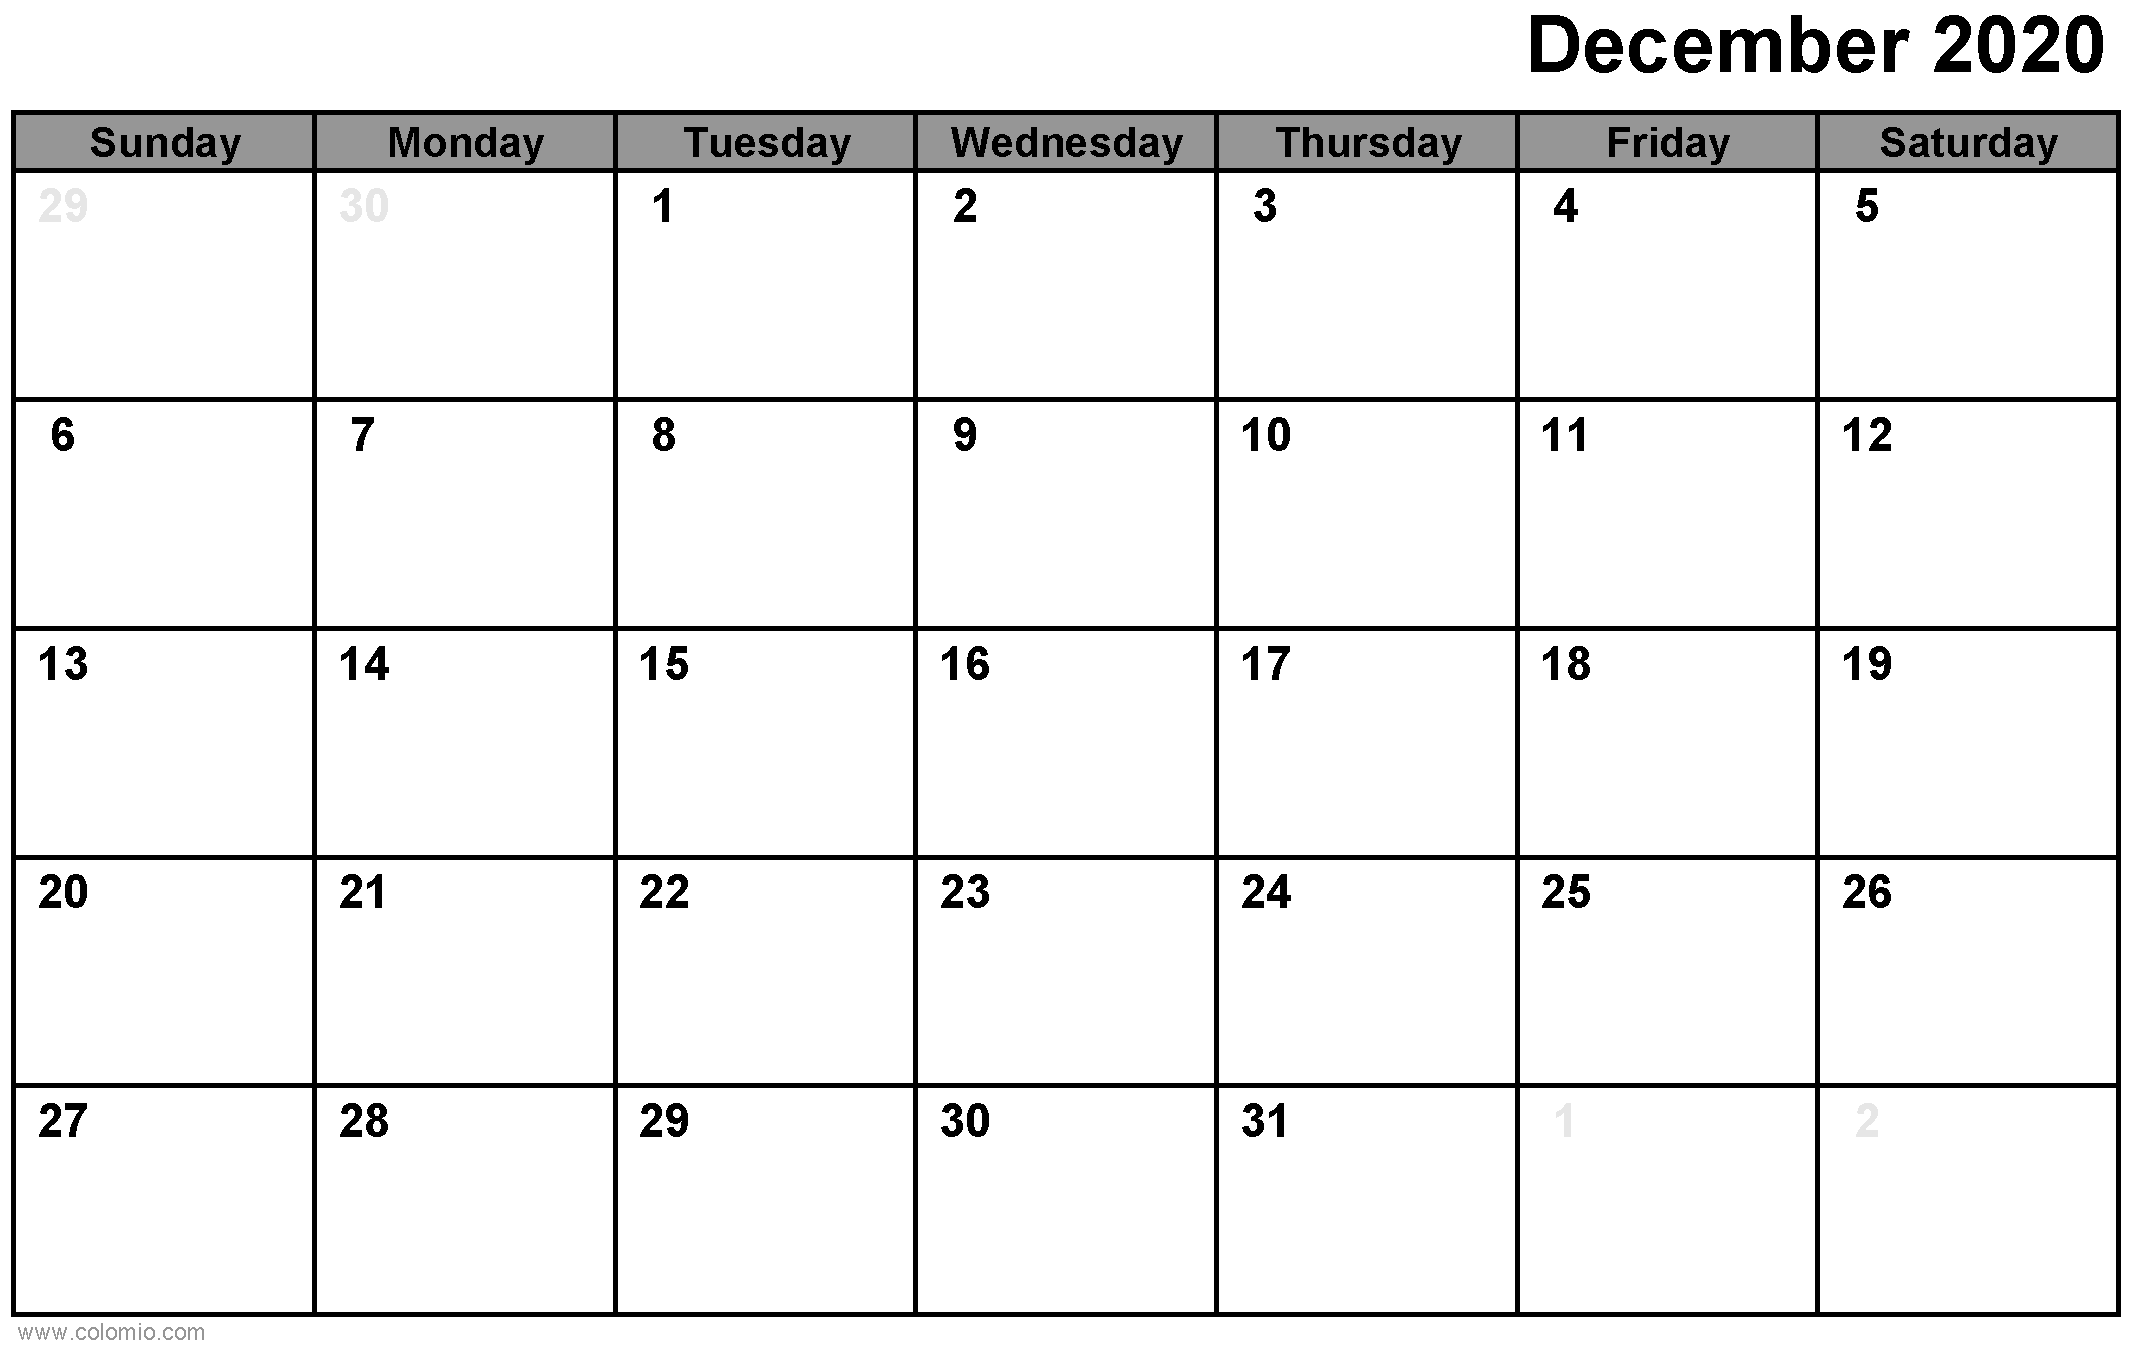 December 2020 Calendar printable